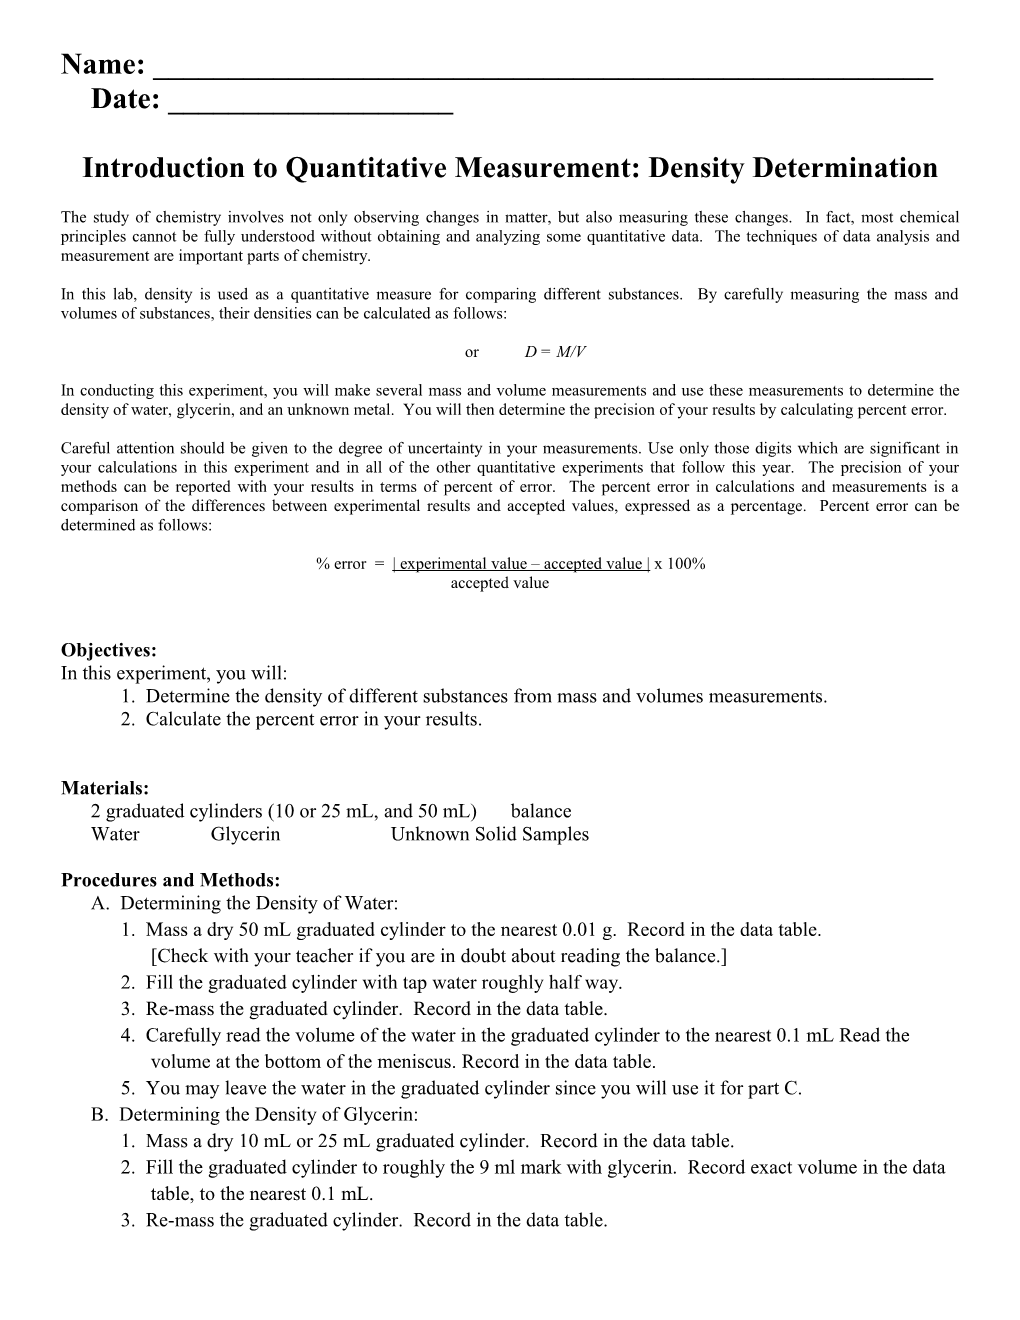 Introduction to Quantitative Measurement: Density Determination Lab 3